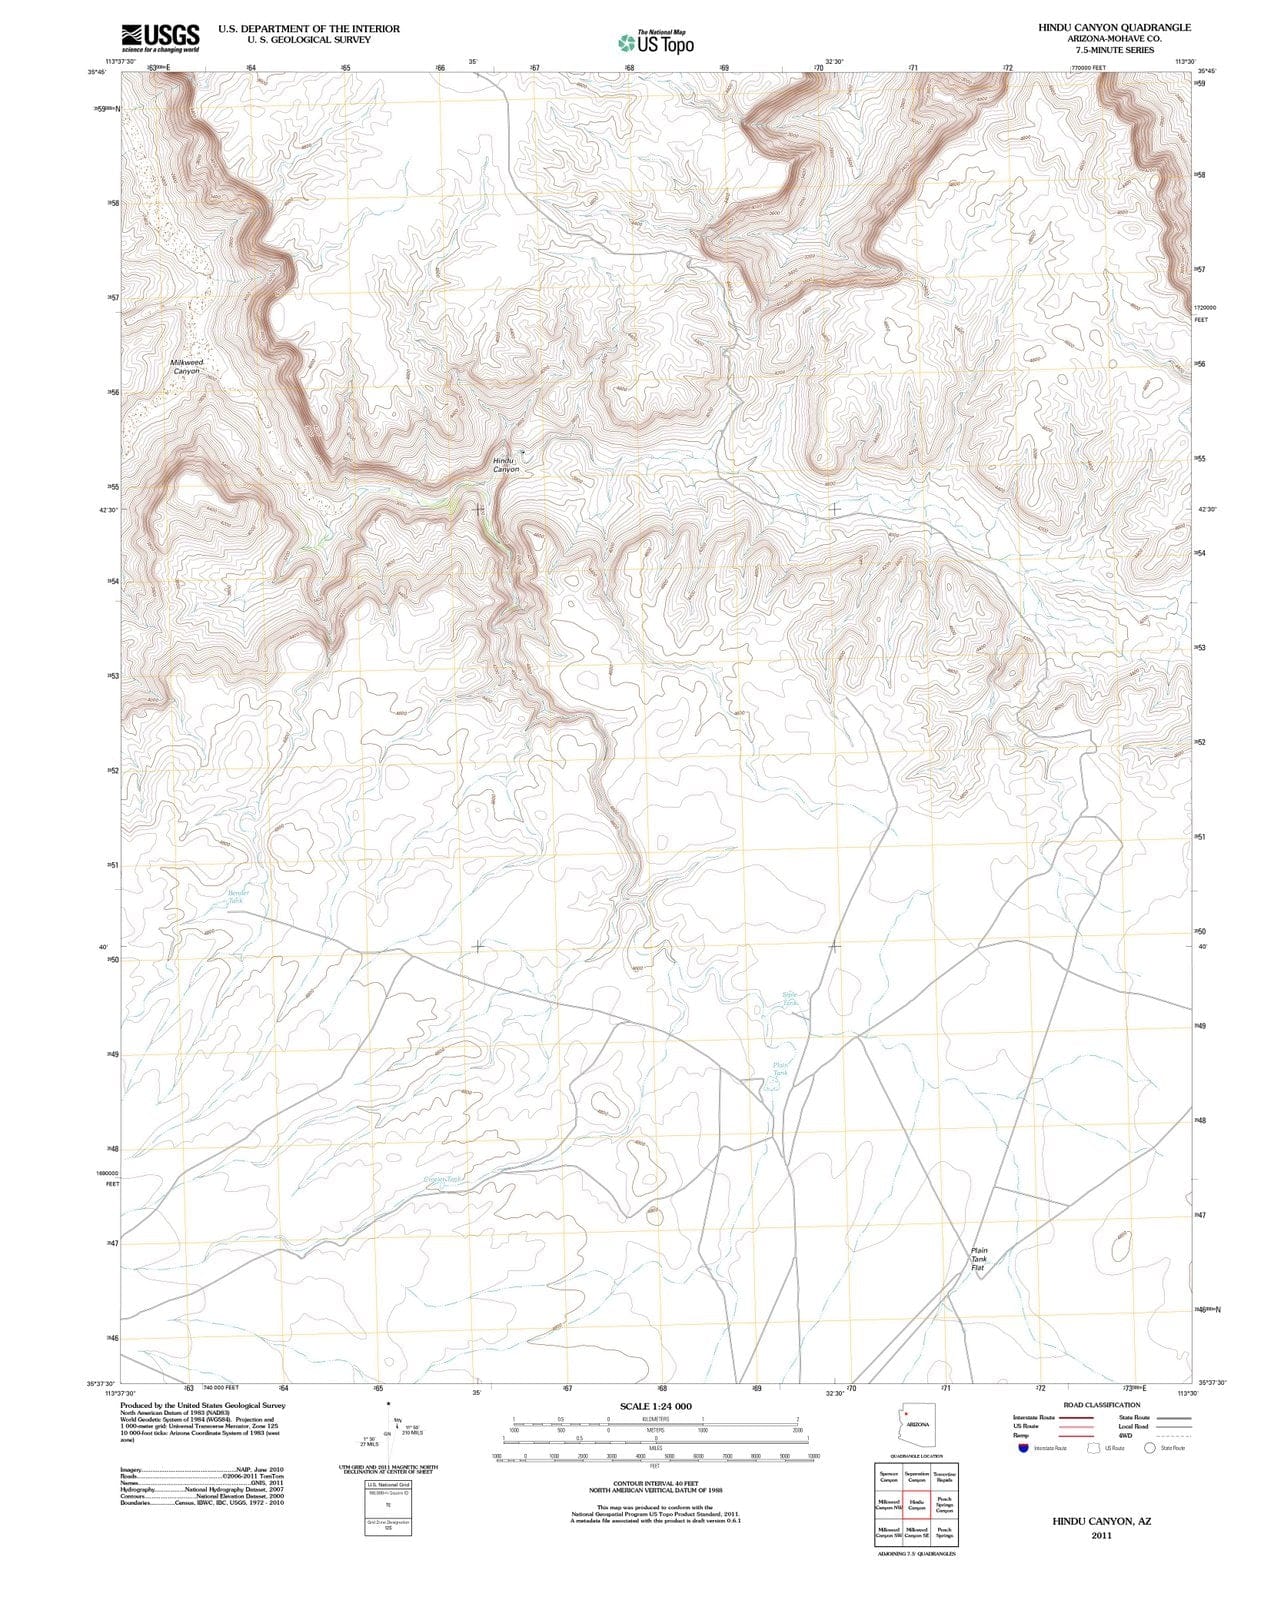 2011 Hindu Canyon, AZ - Arizona - USGS Topographic Map